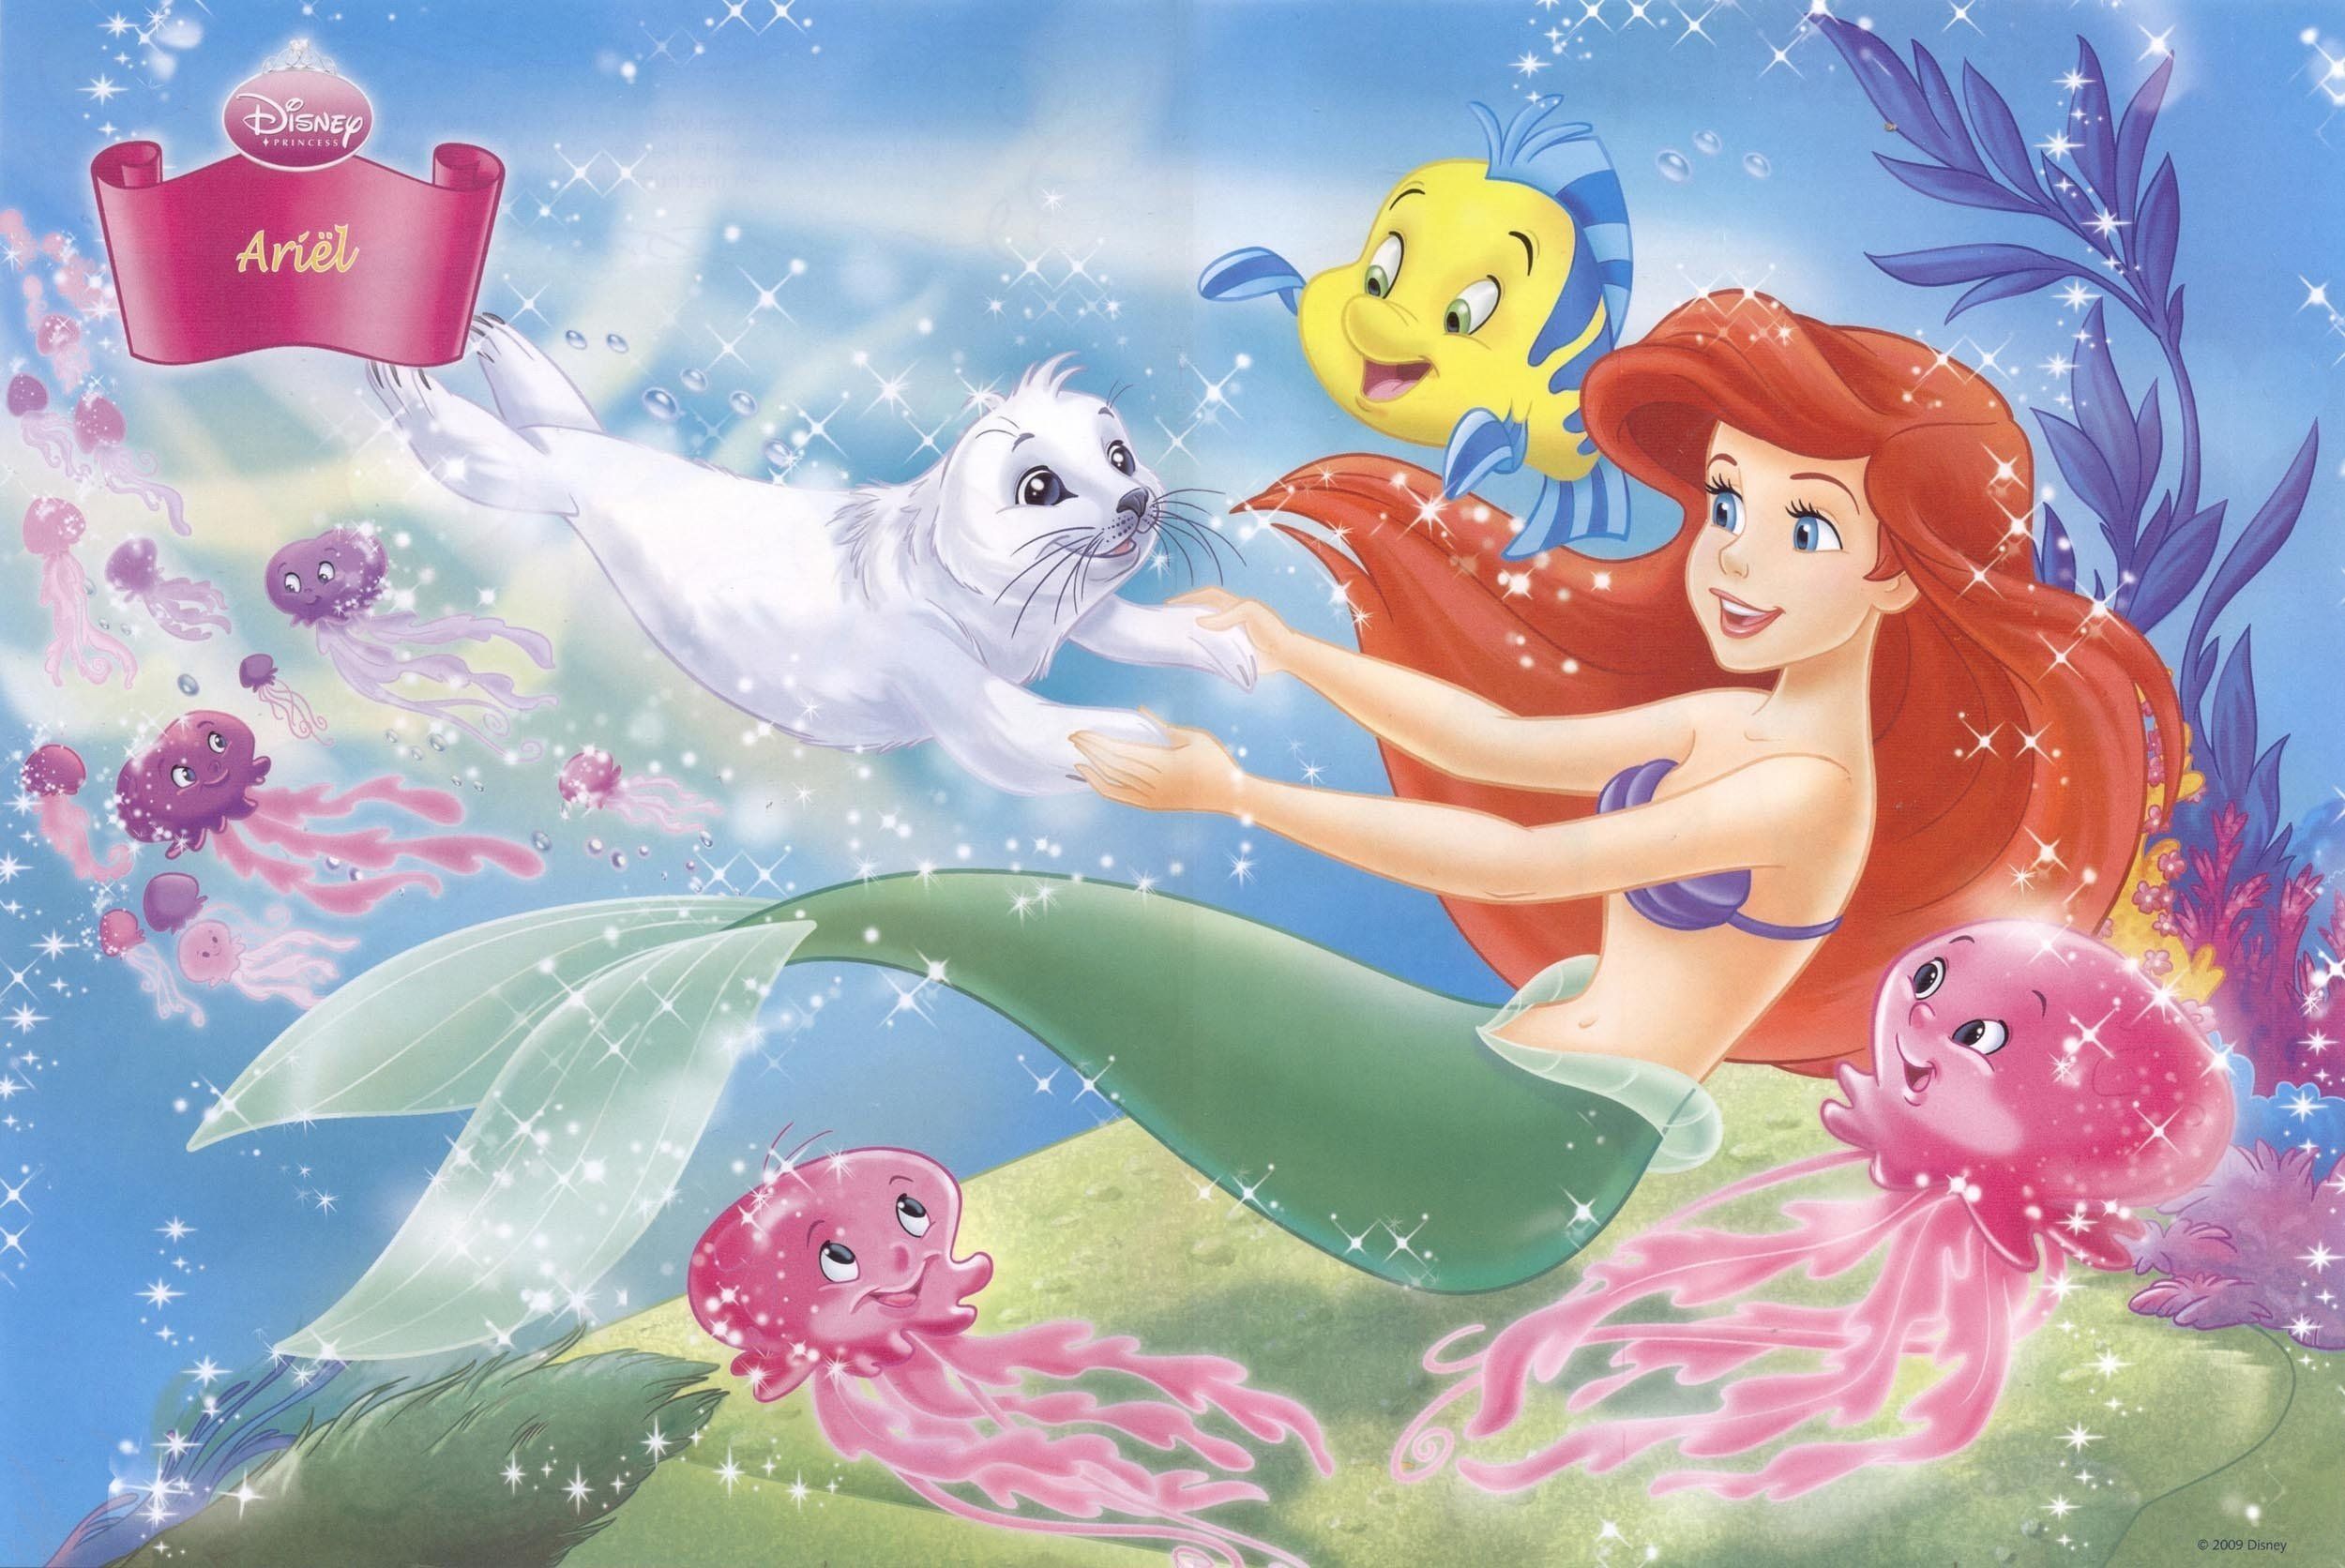 LITTLE MERMAID disney fantasy animation cartoon adventure family 1littlemermaid ariel prince. Ariel wallpaper, Little mermaid wallpaper, Disney princess wallpaper